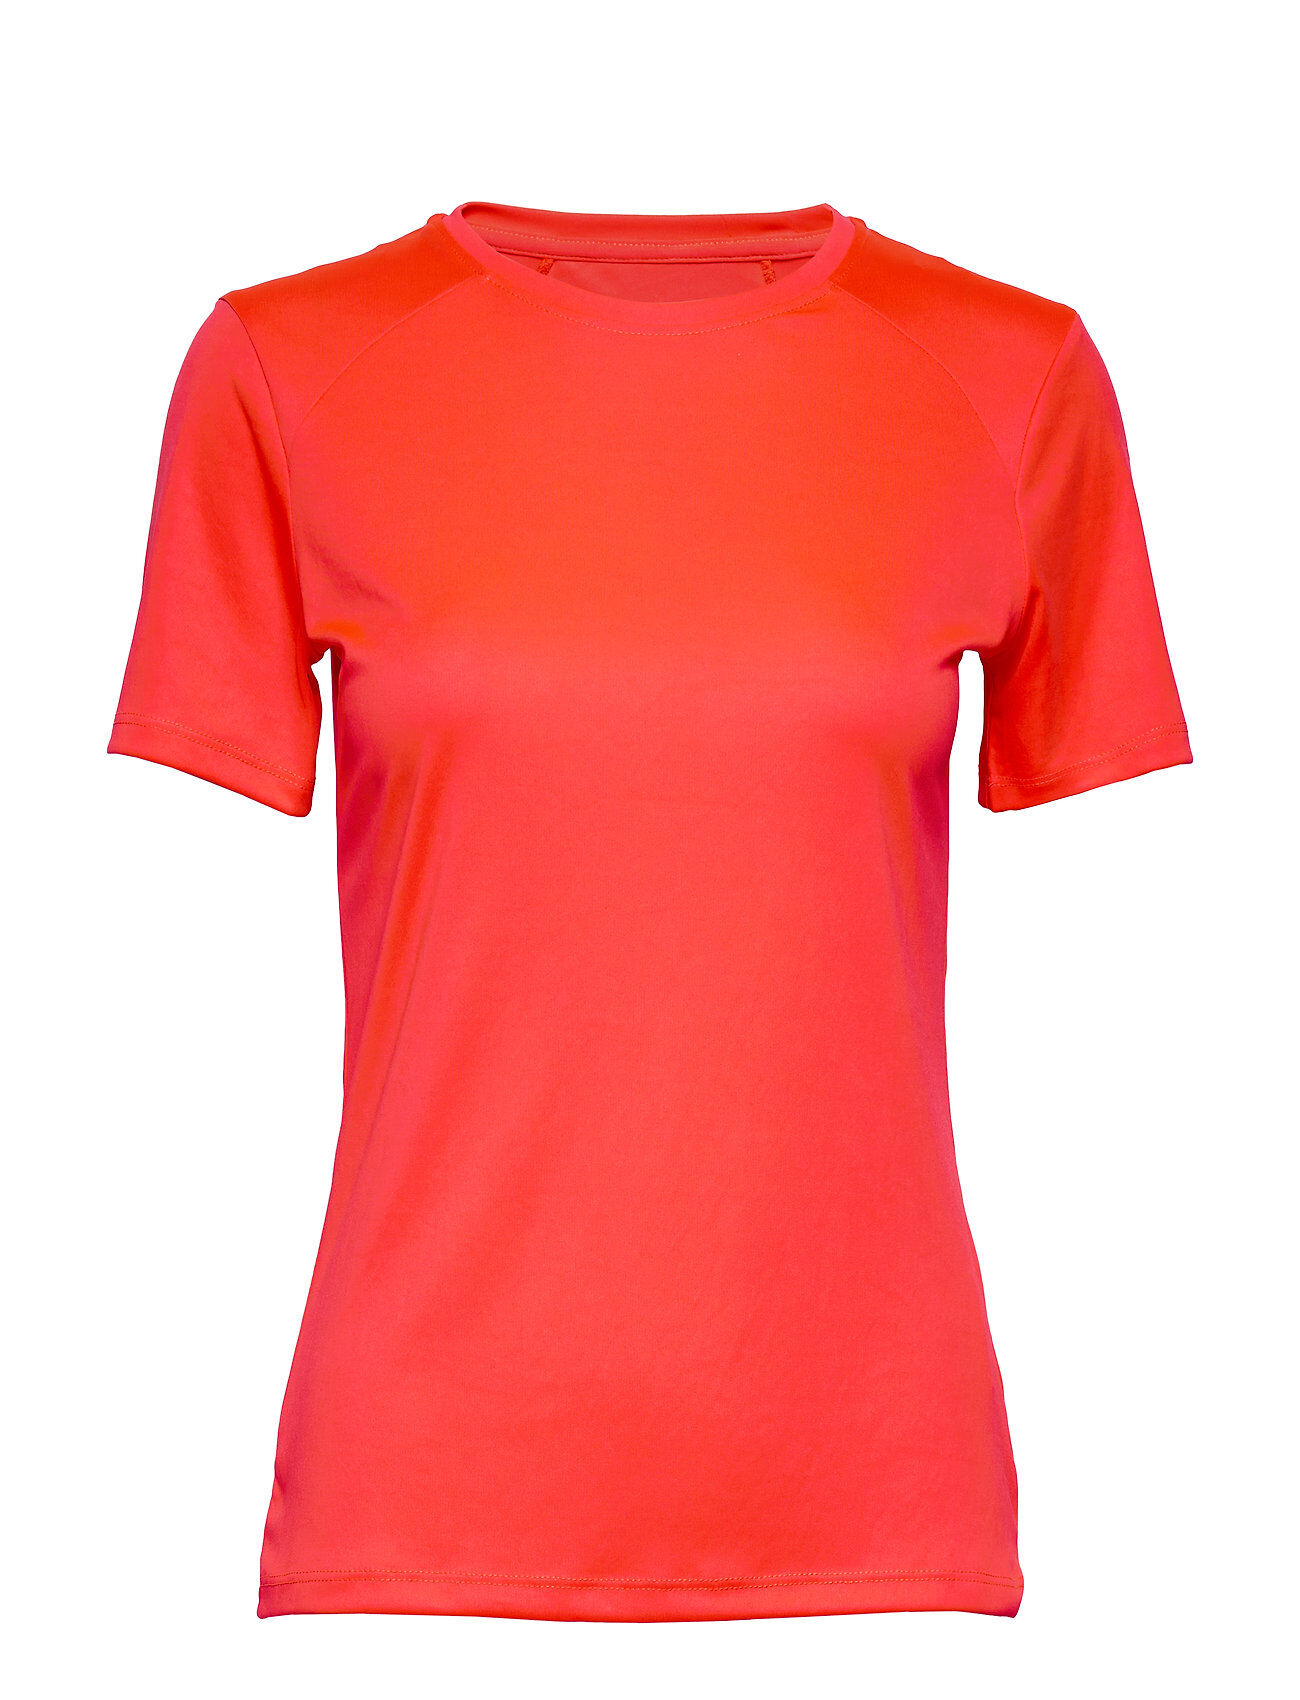 Halti Anet Women's Training T-Shirt T-shirts & Tops Short-sleeved Oransje Halti